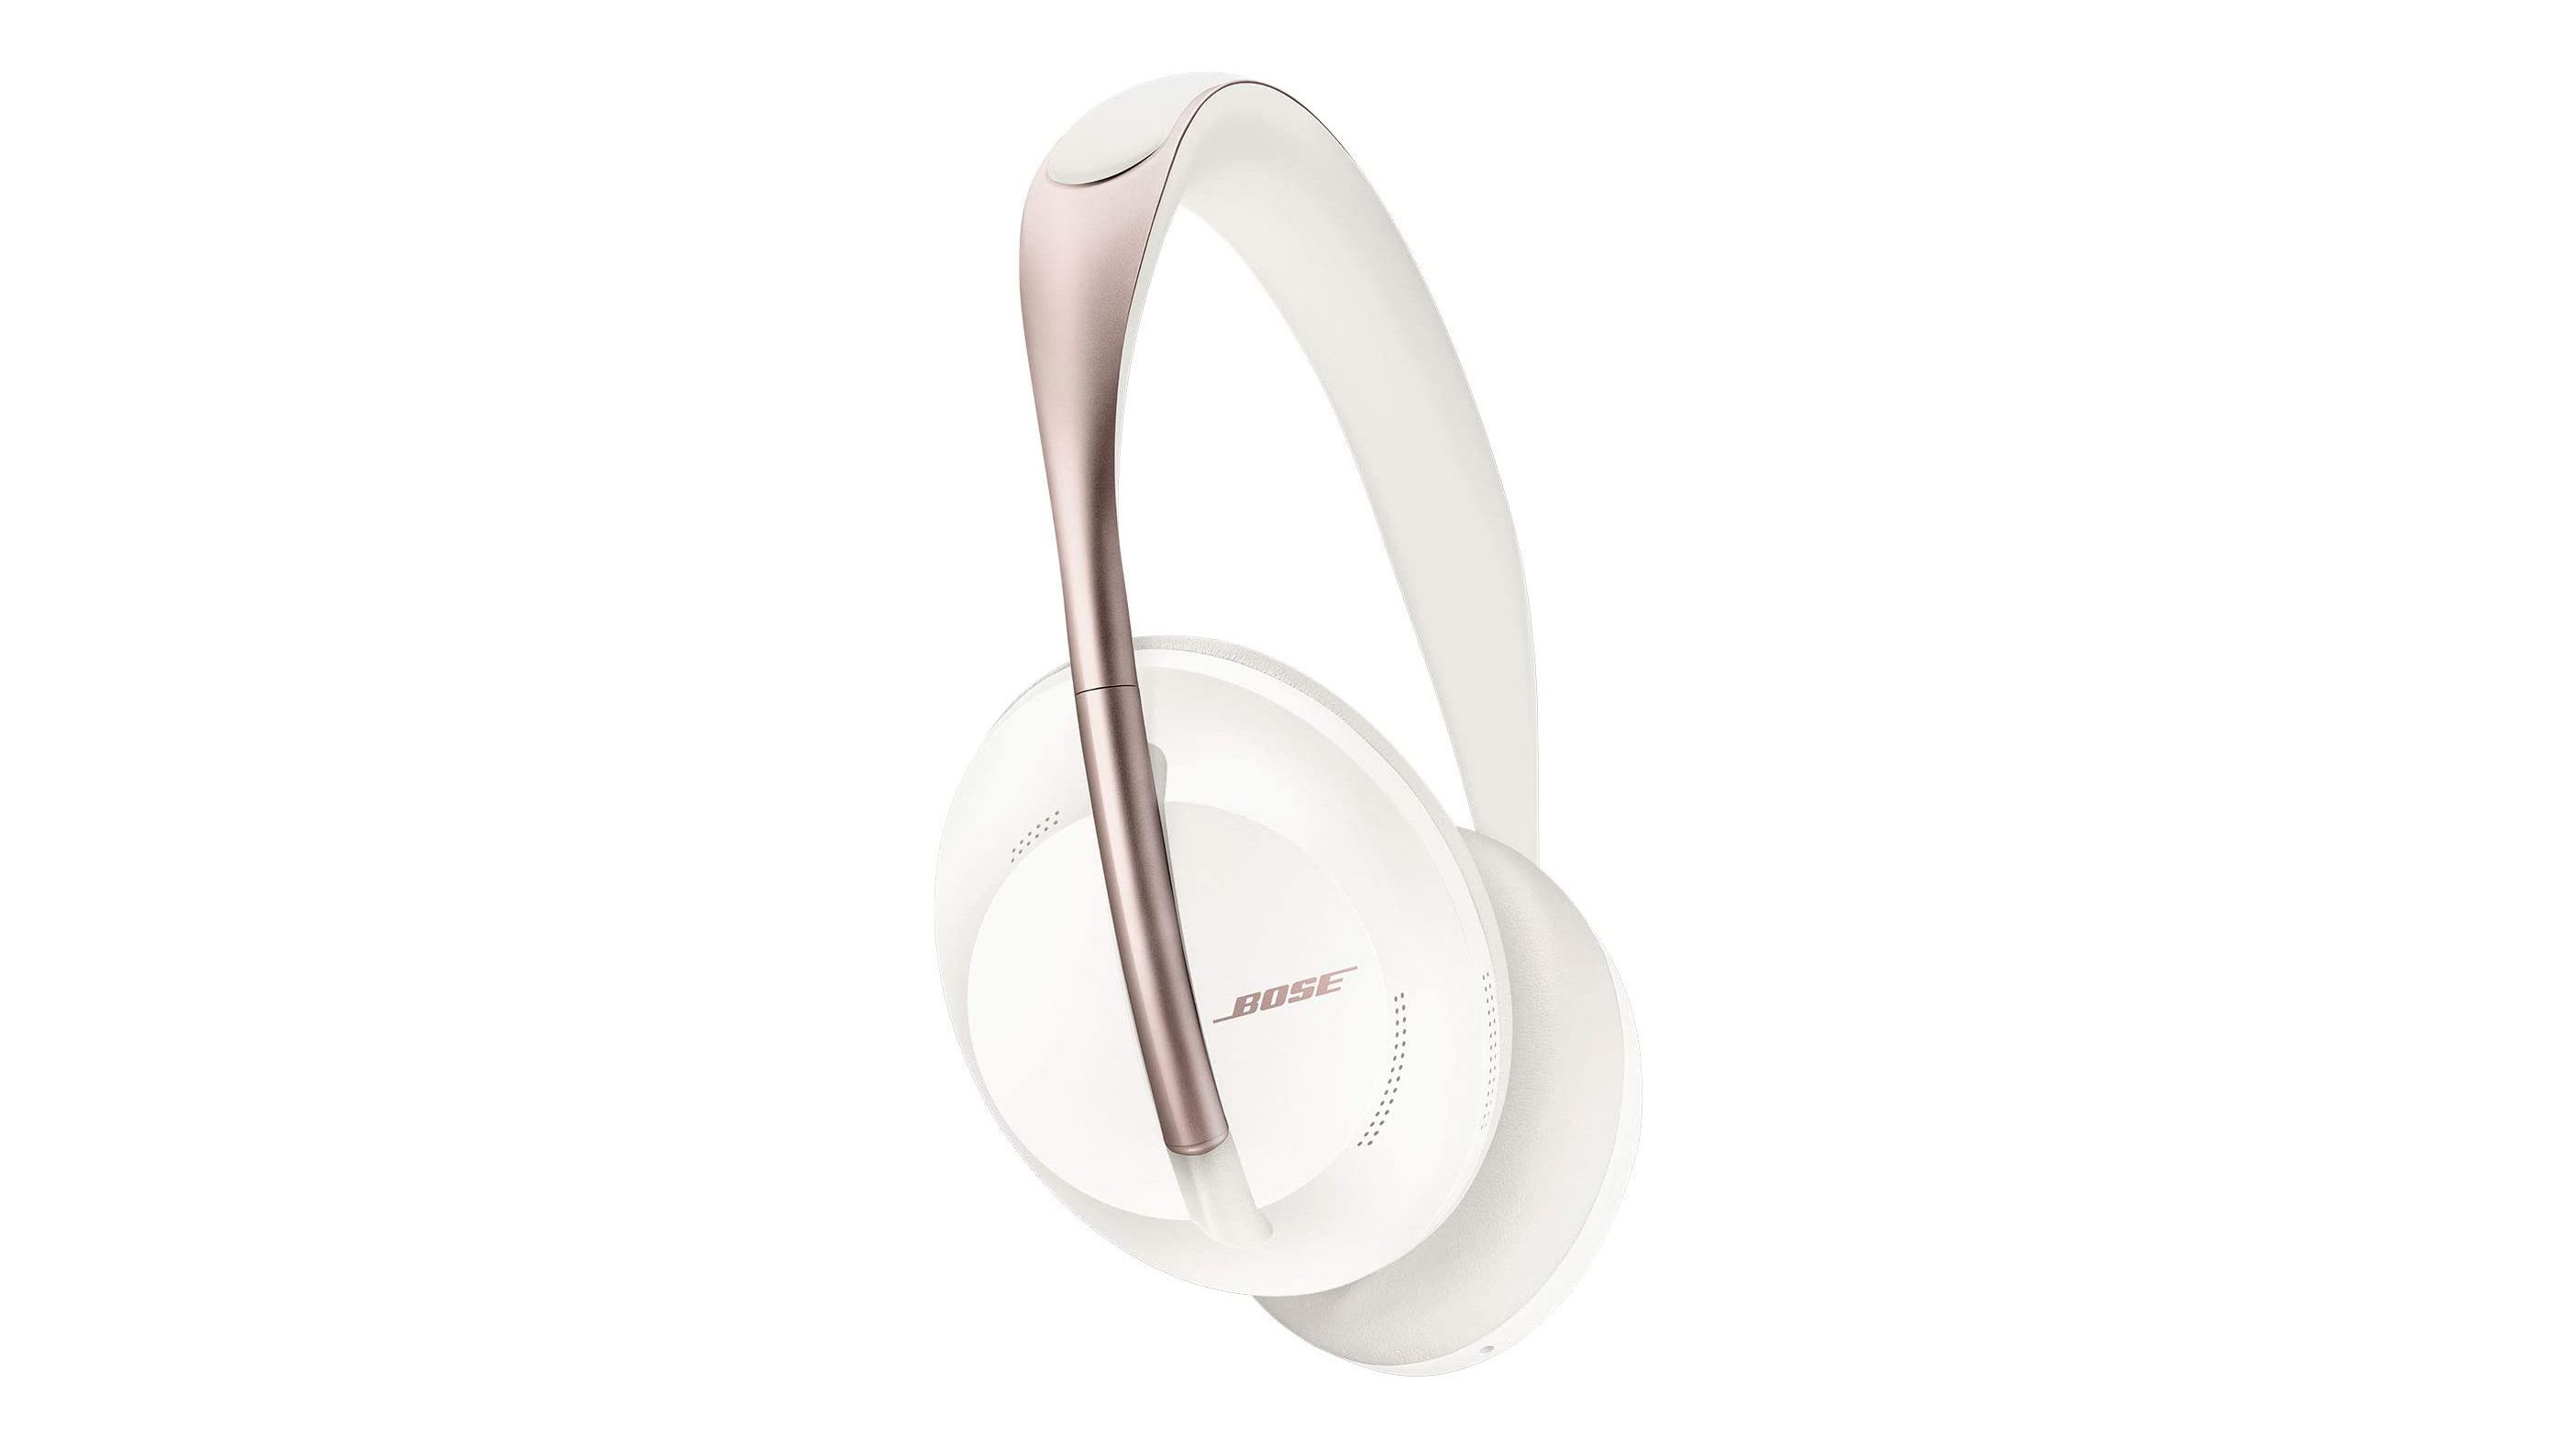 700 sale: Save $150 our favorite refurbished headphones | Underscored